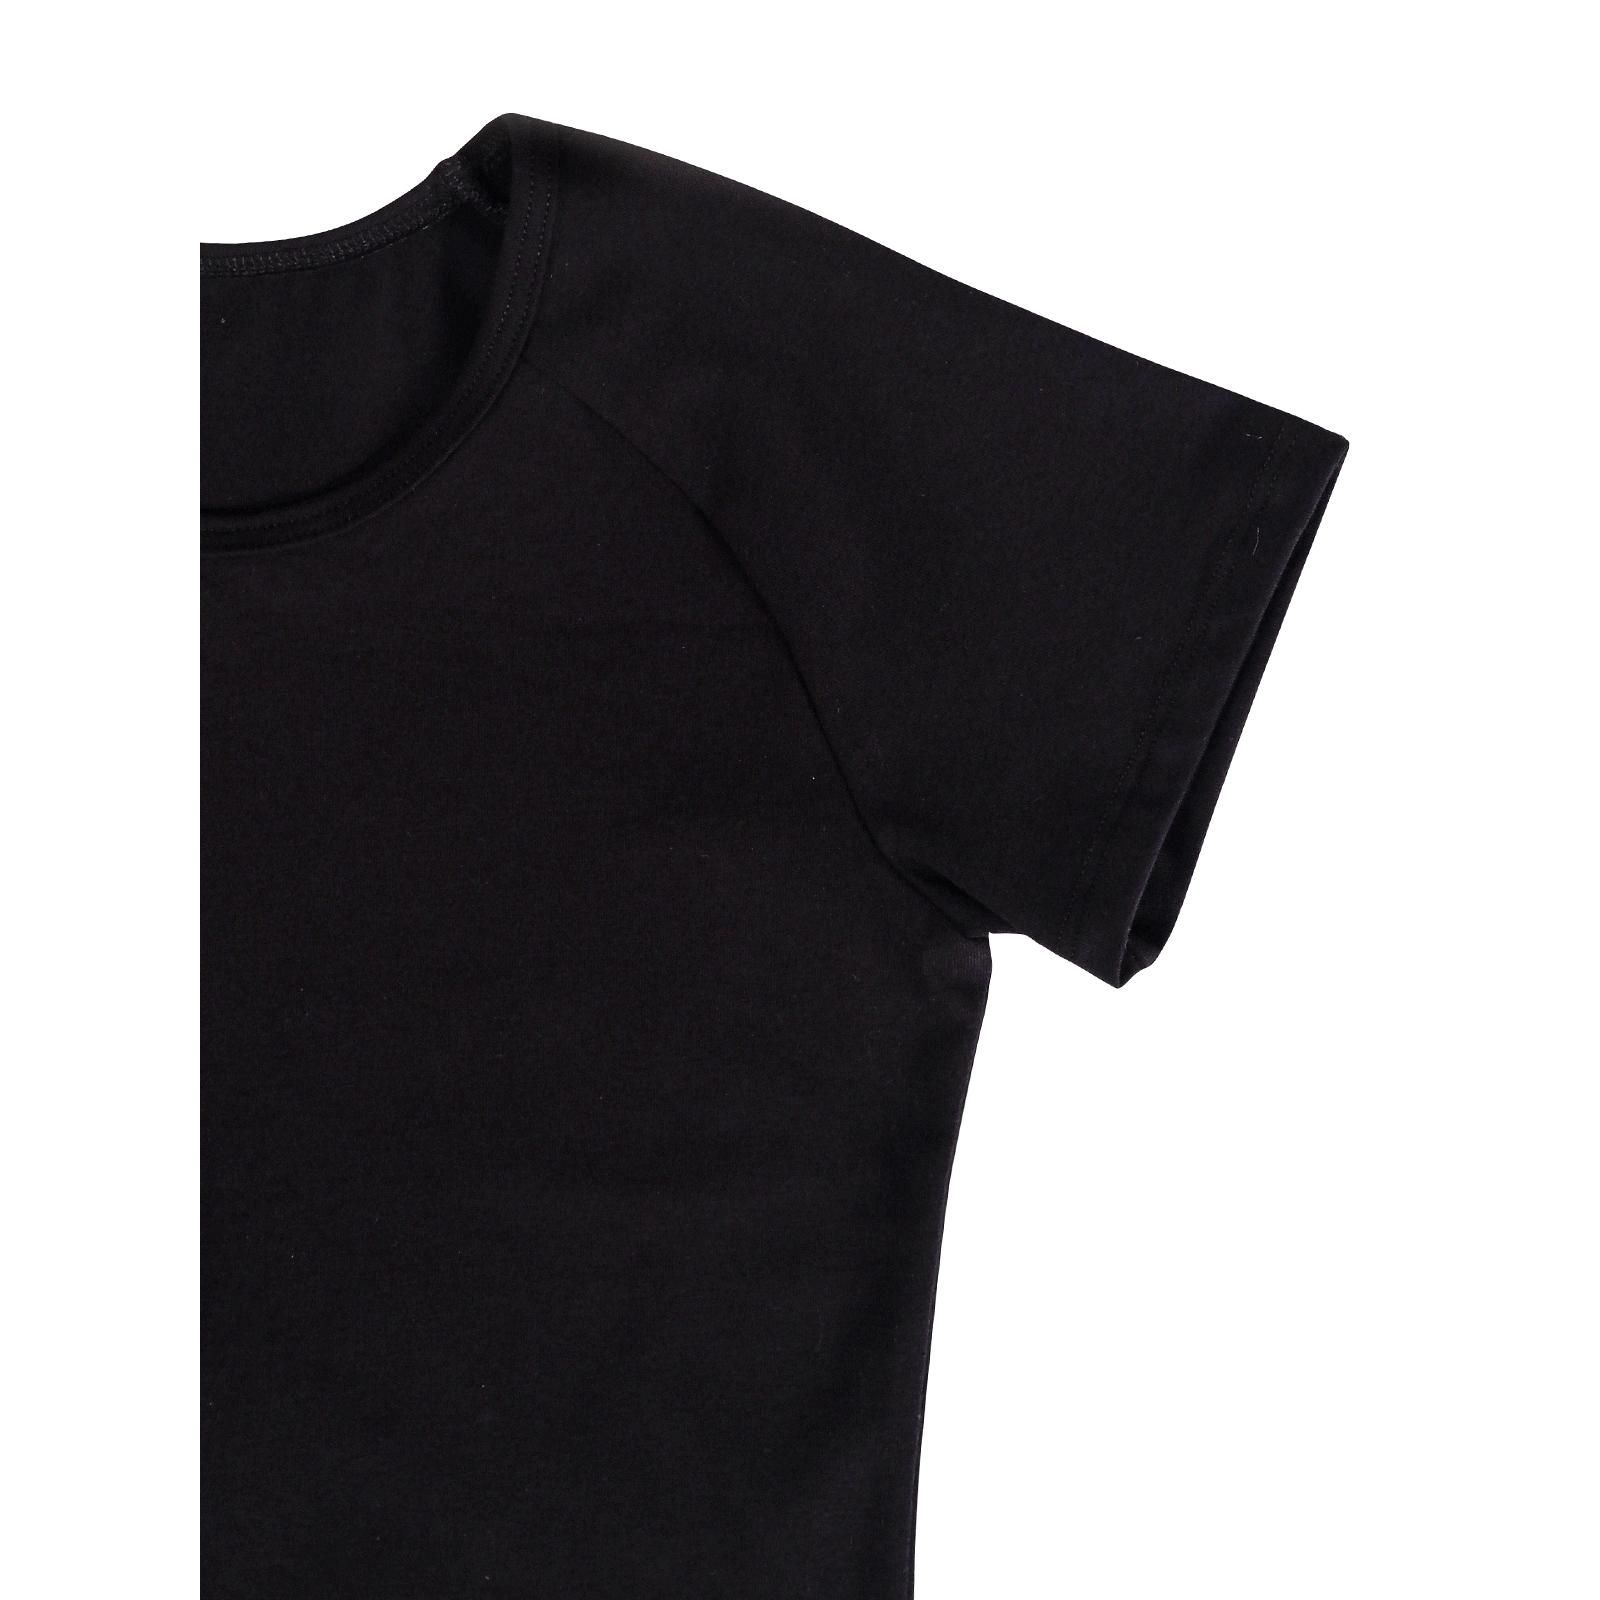 Camiseta Mangas Raglán de Algodón SOLO Negro Talla 42